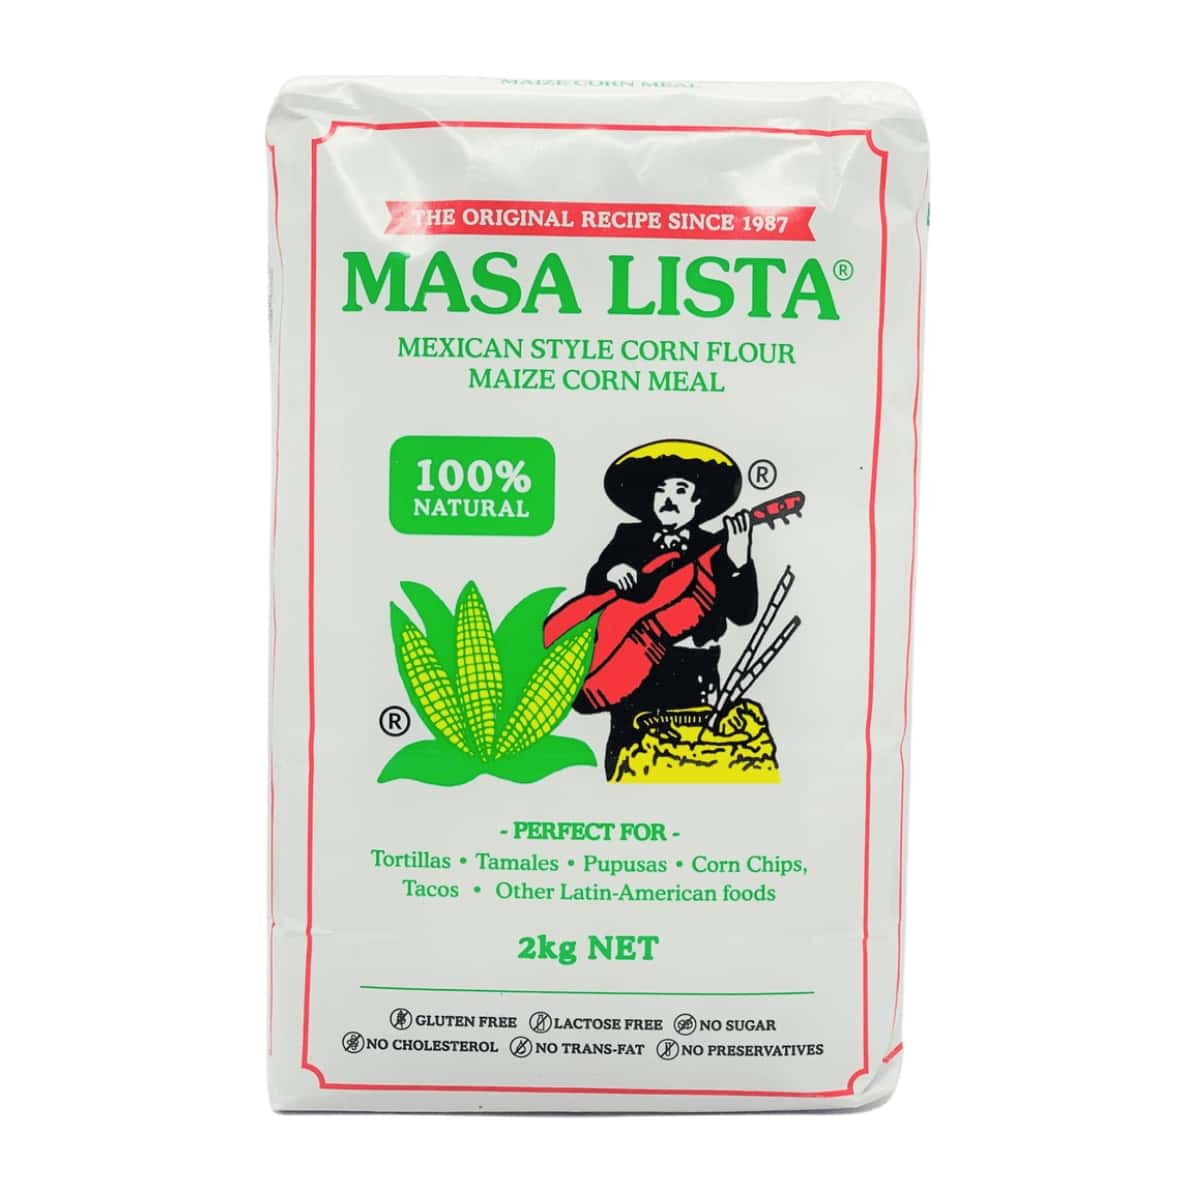 Buy Masa Lista Maxican Style Corn Flour (Maize Corn Meal) 100% Natural - 2 kg